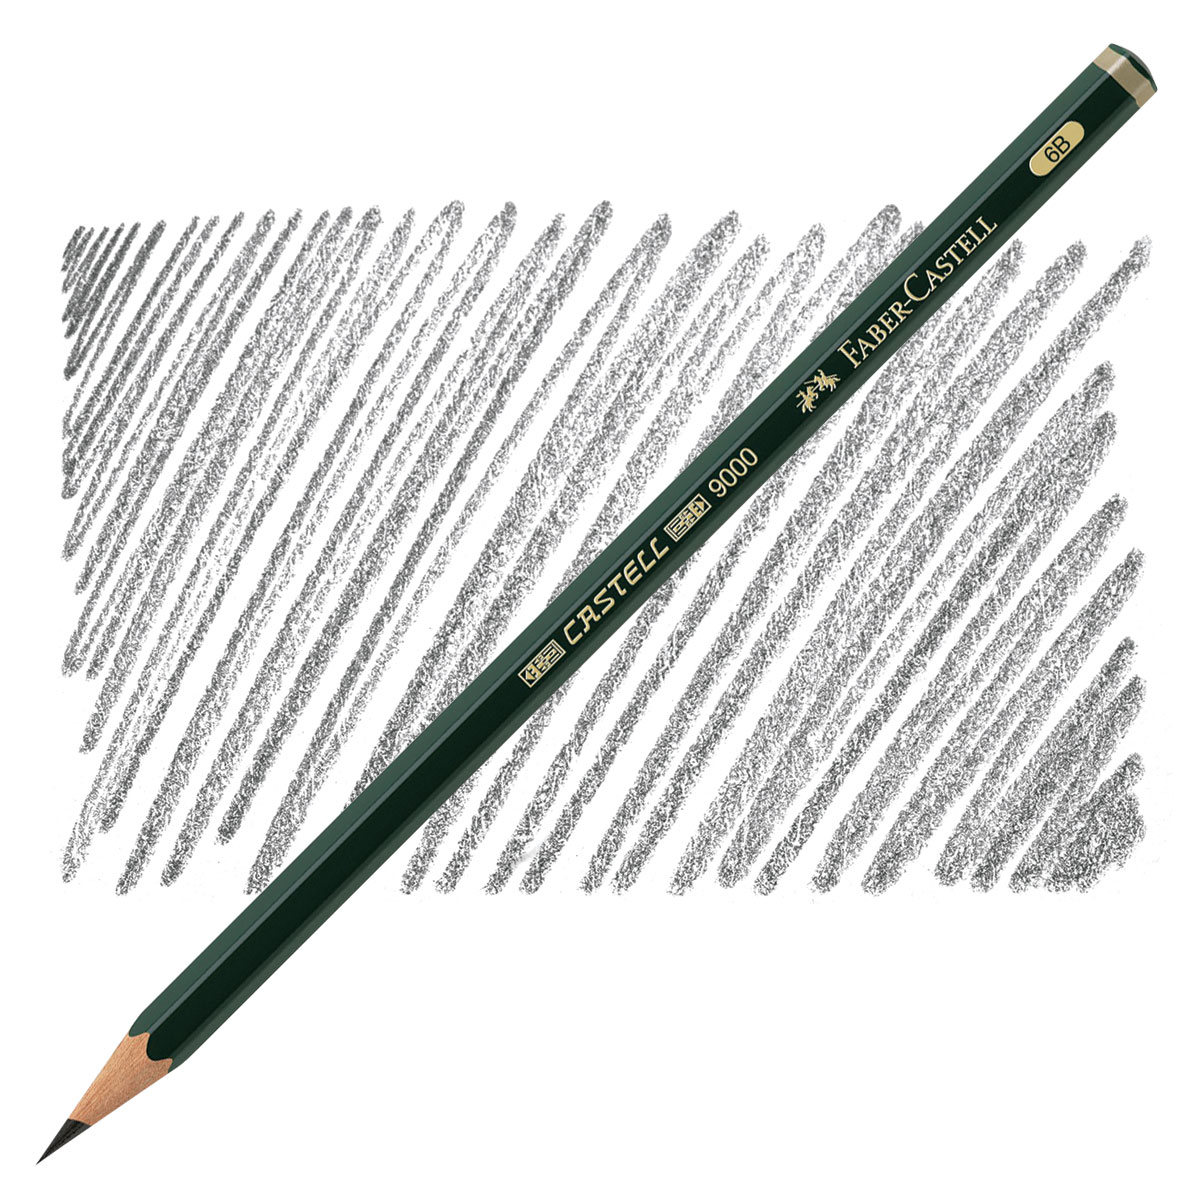 Faber-Castell Castell 9000 Graphite Pencils Art 2H-8B Set 12-pack • Price »